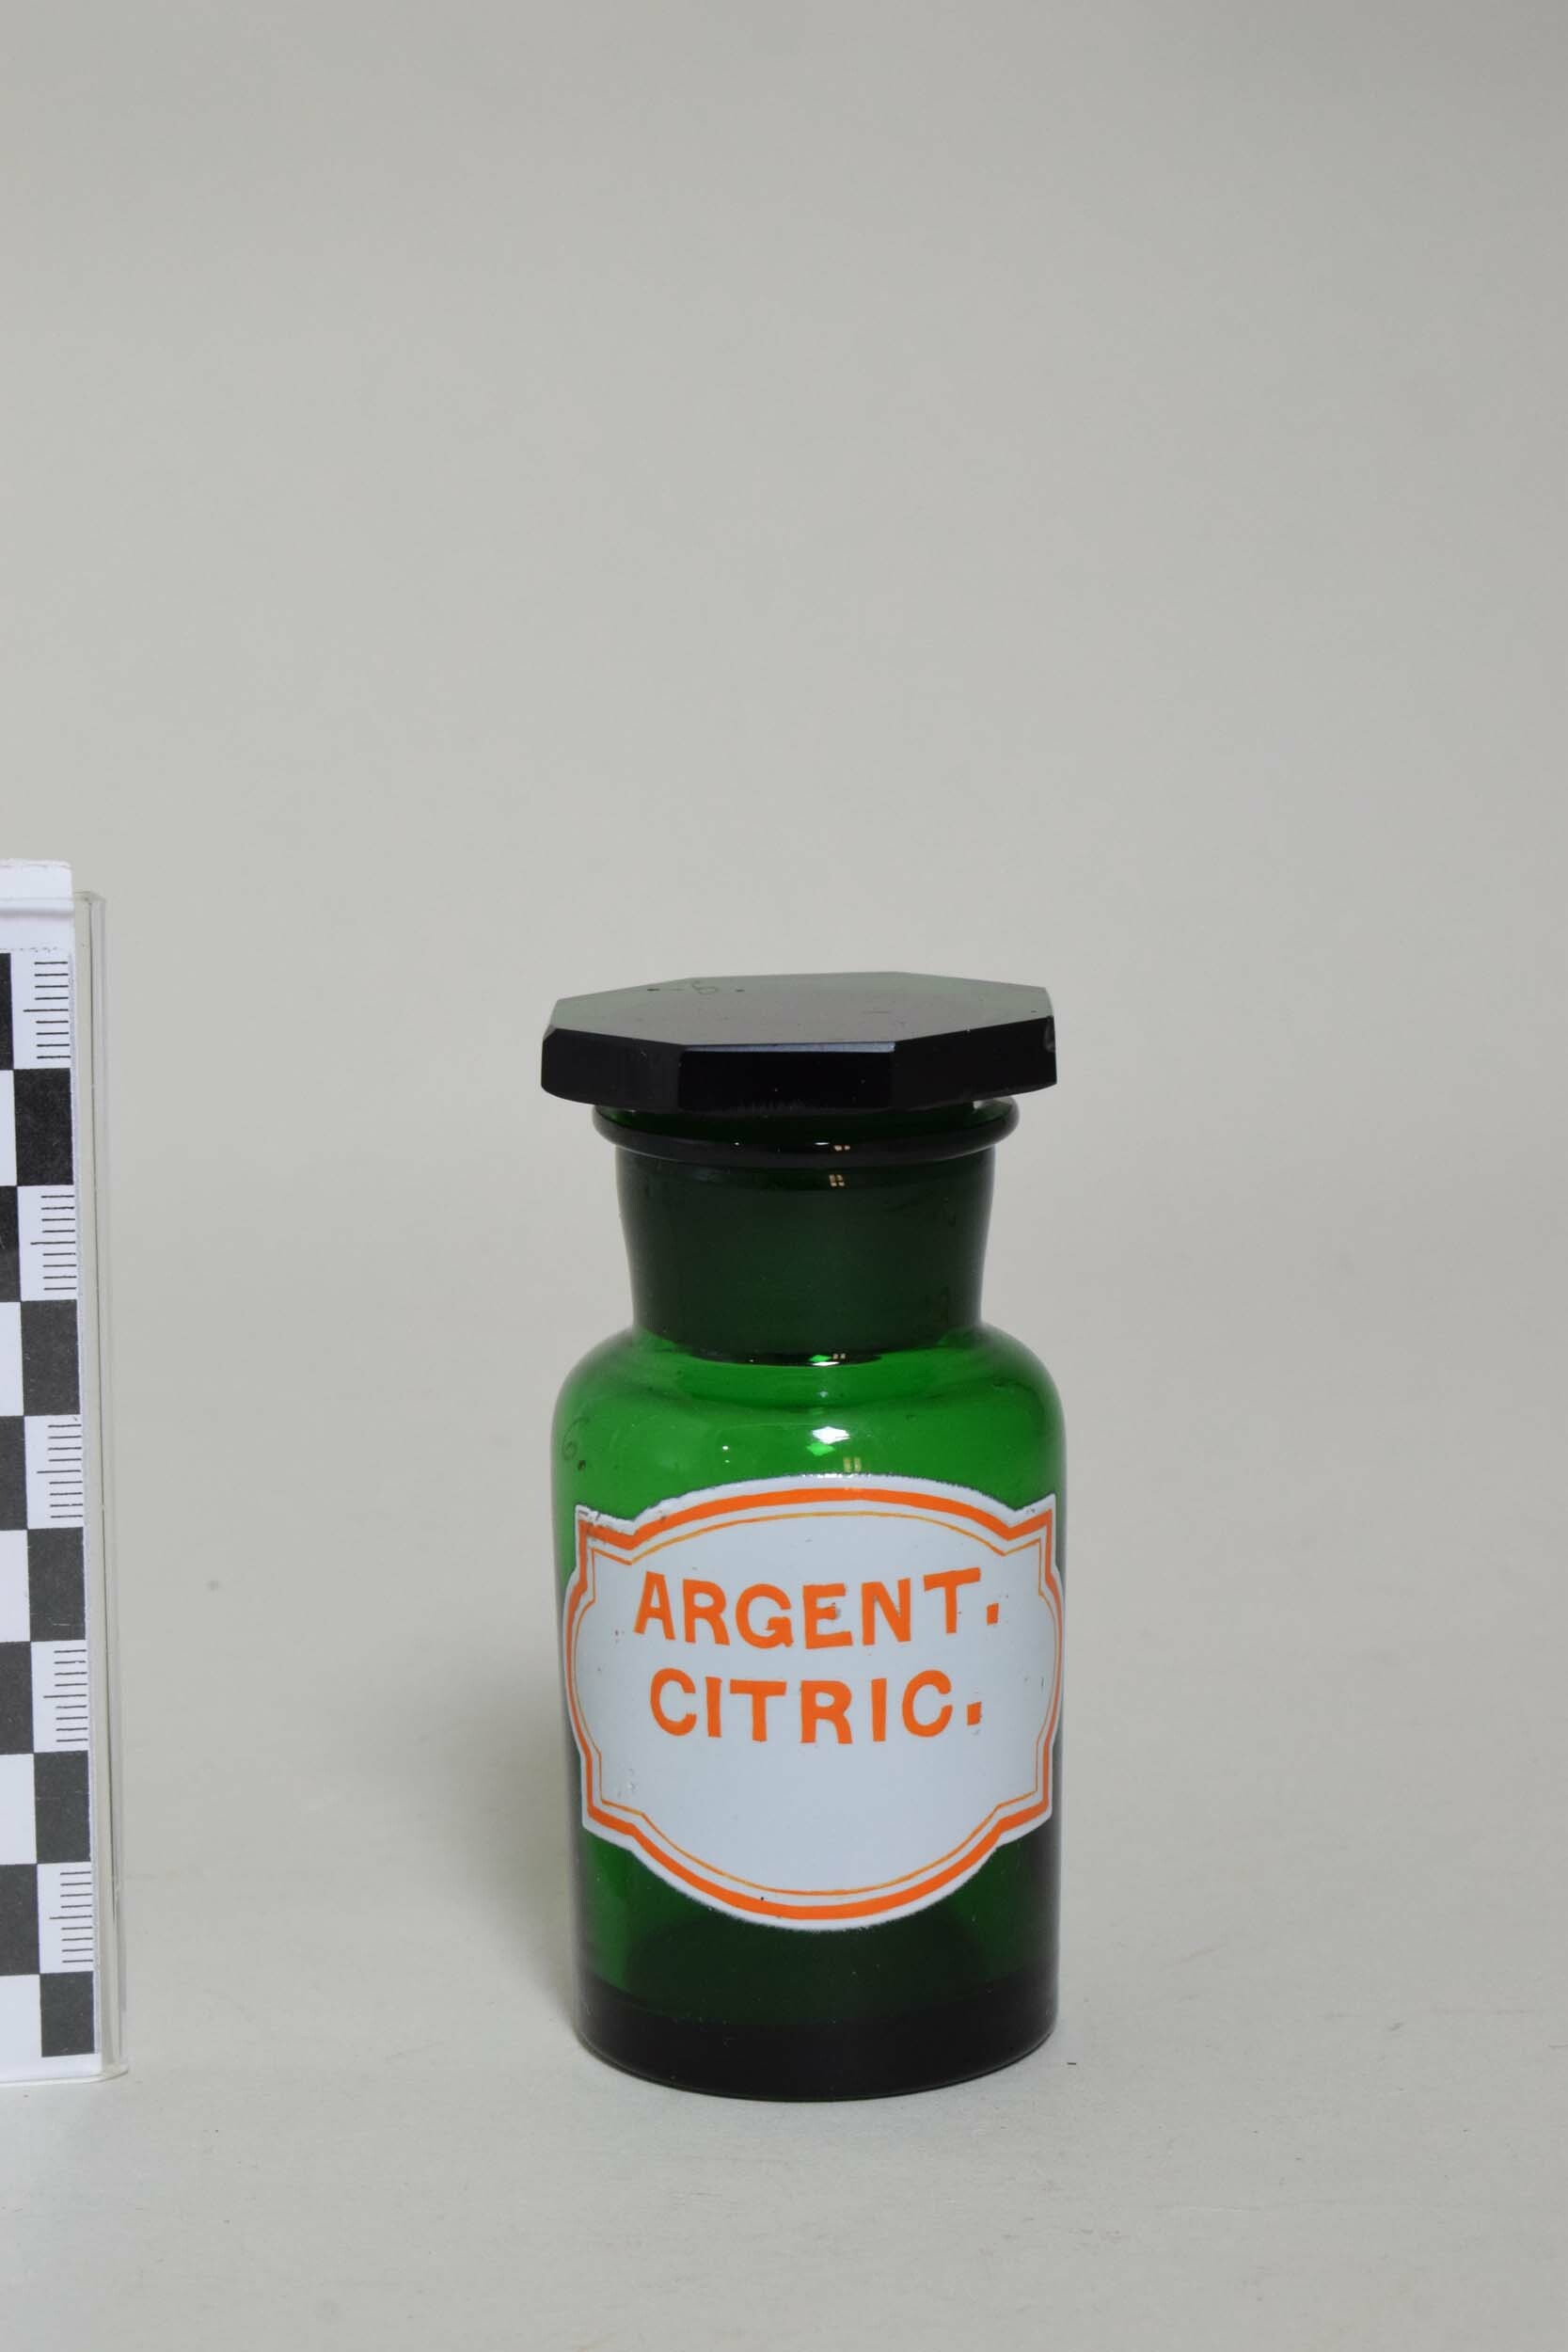 Apothekenflasche "ARGENT. CITRIC." (Itrol) (Heimatmuseum Dohna CC BY-NC-SA)